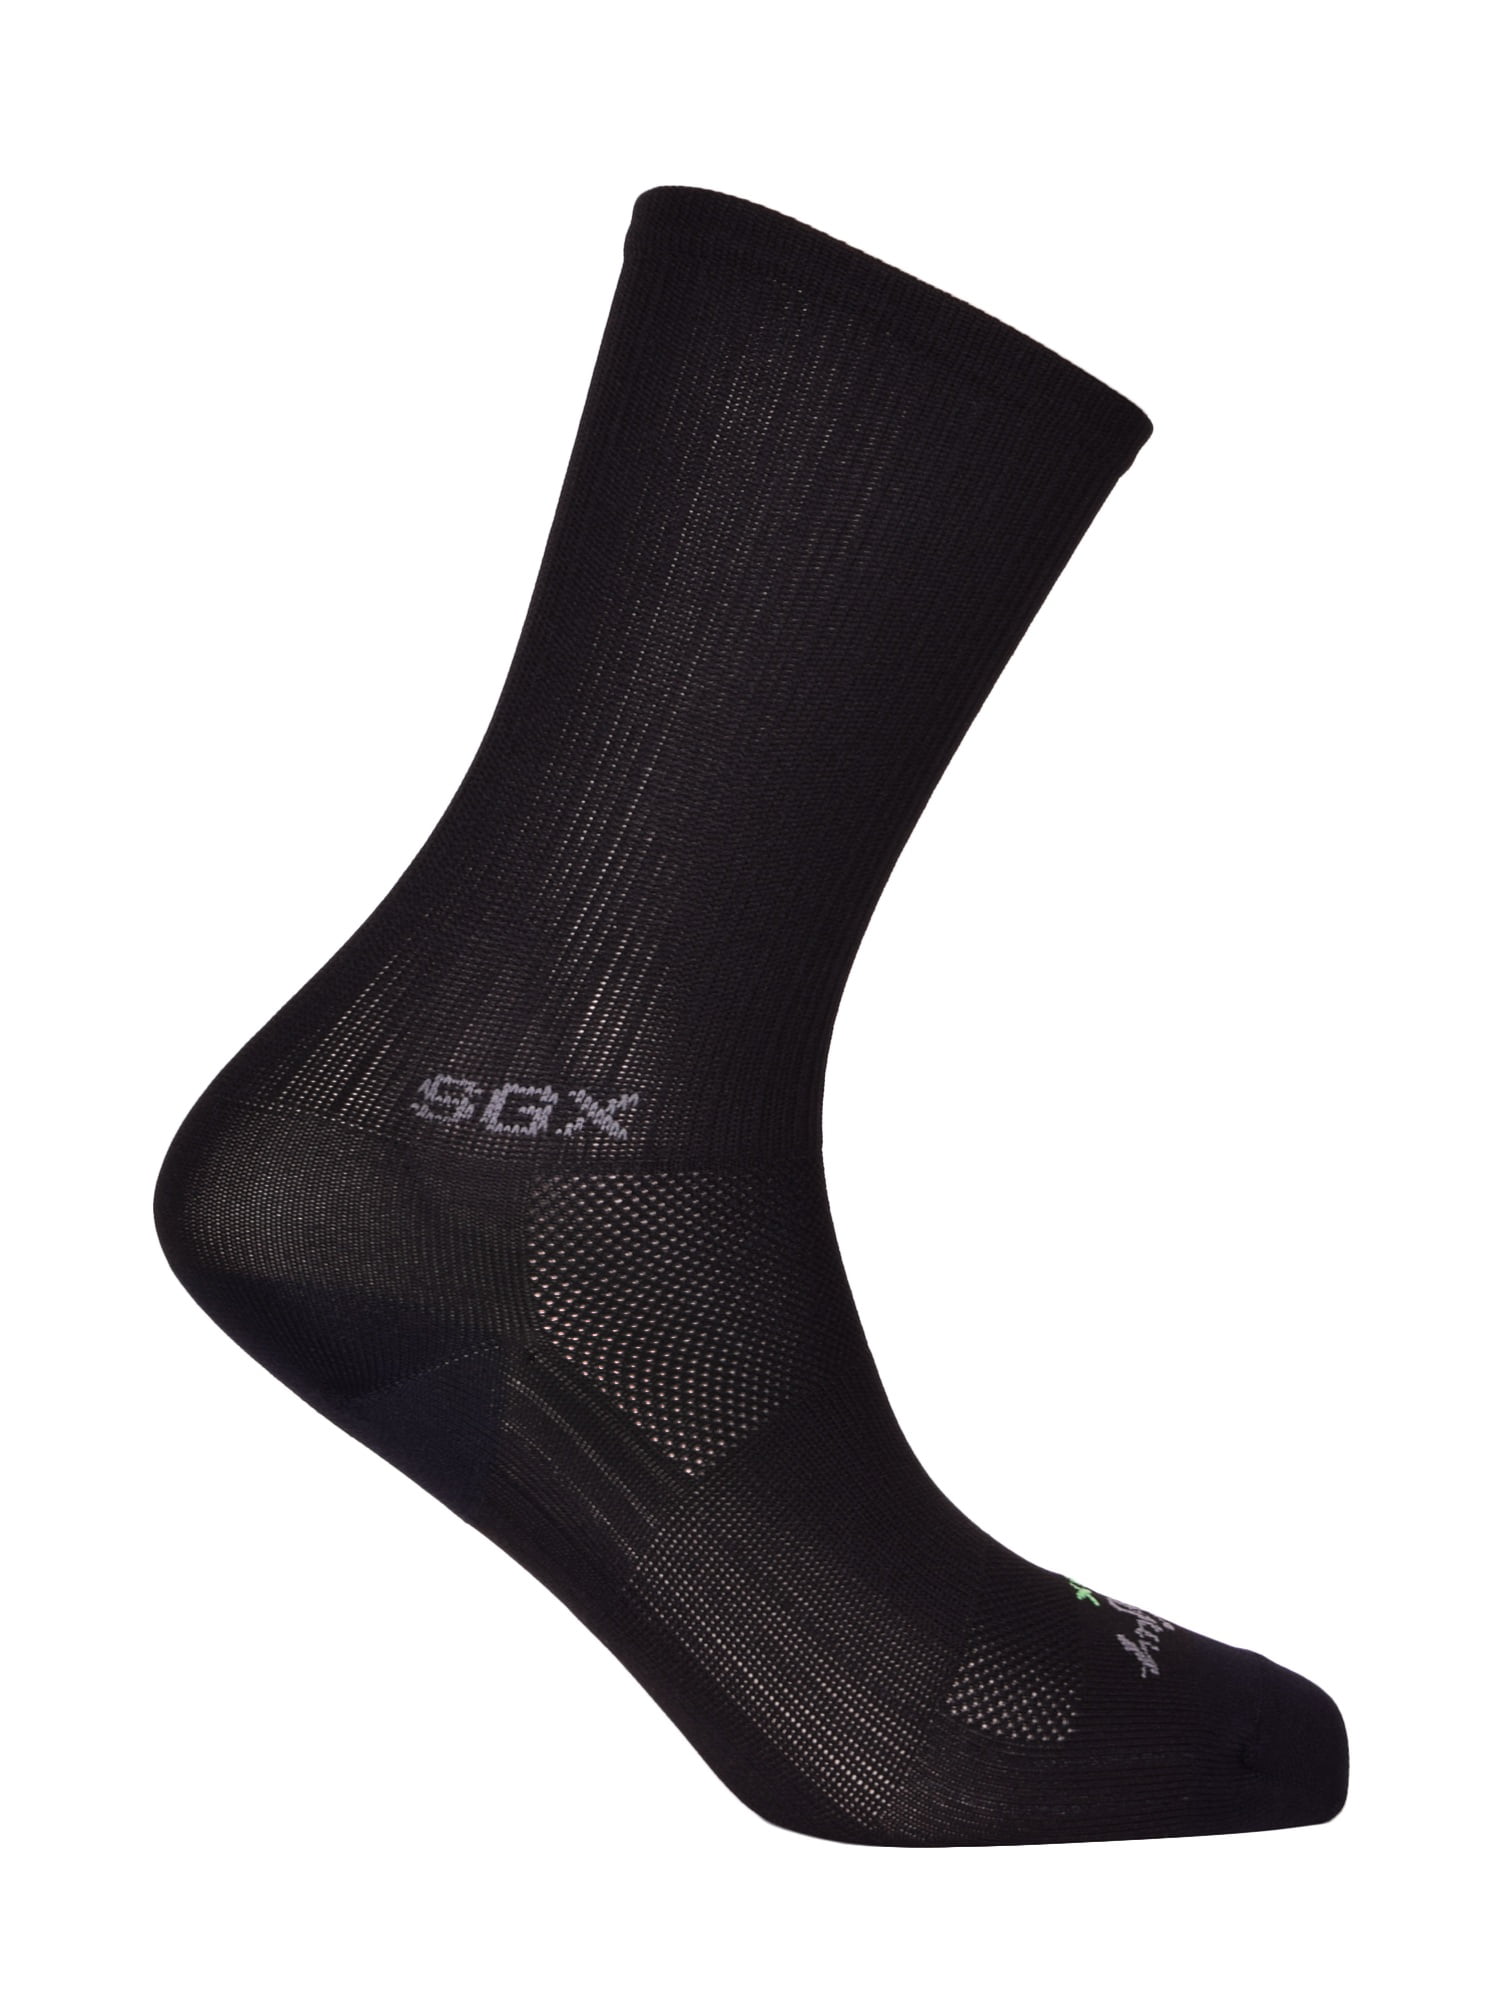 10-13 Sock Guy Team Skinny Legs SGX6 Socks Black 